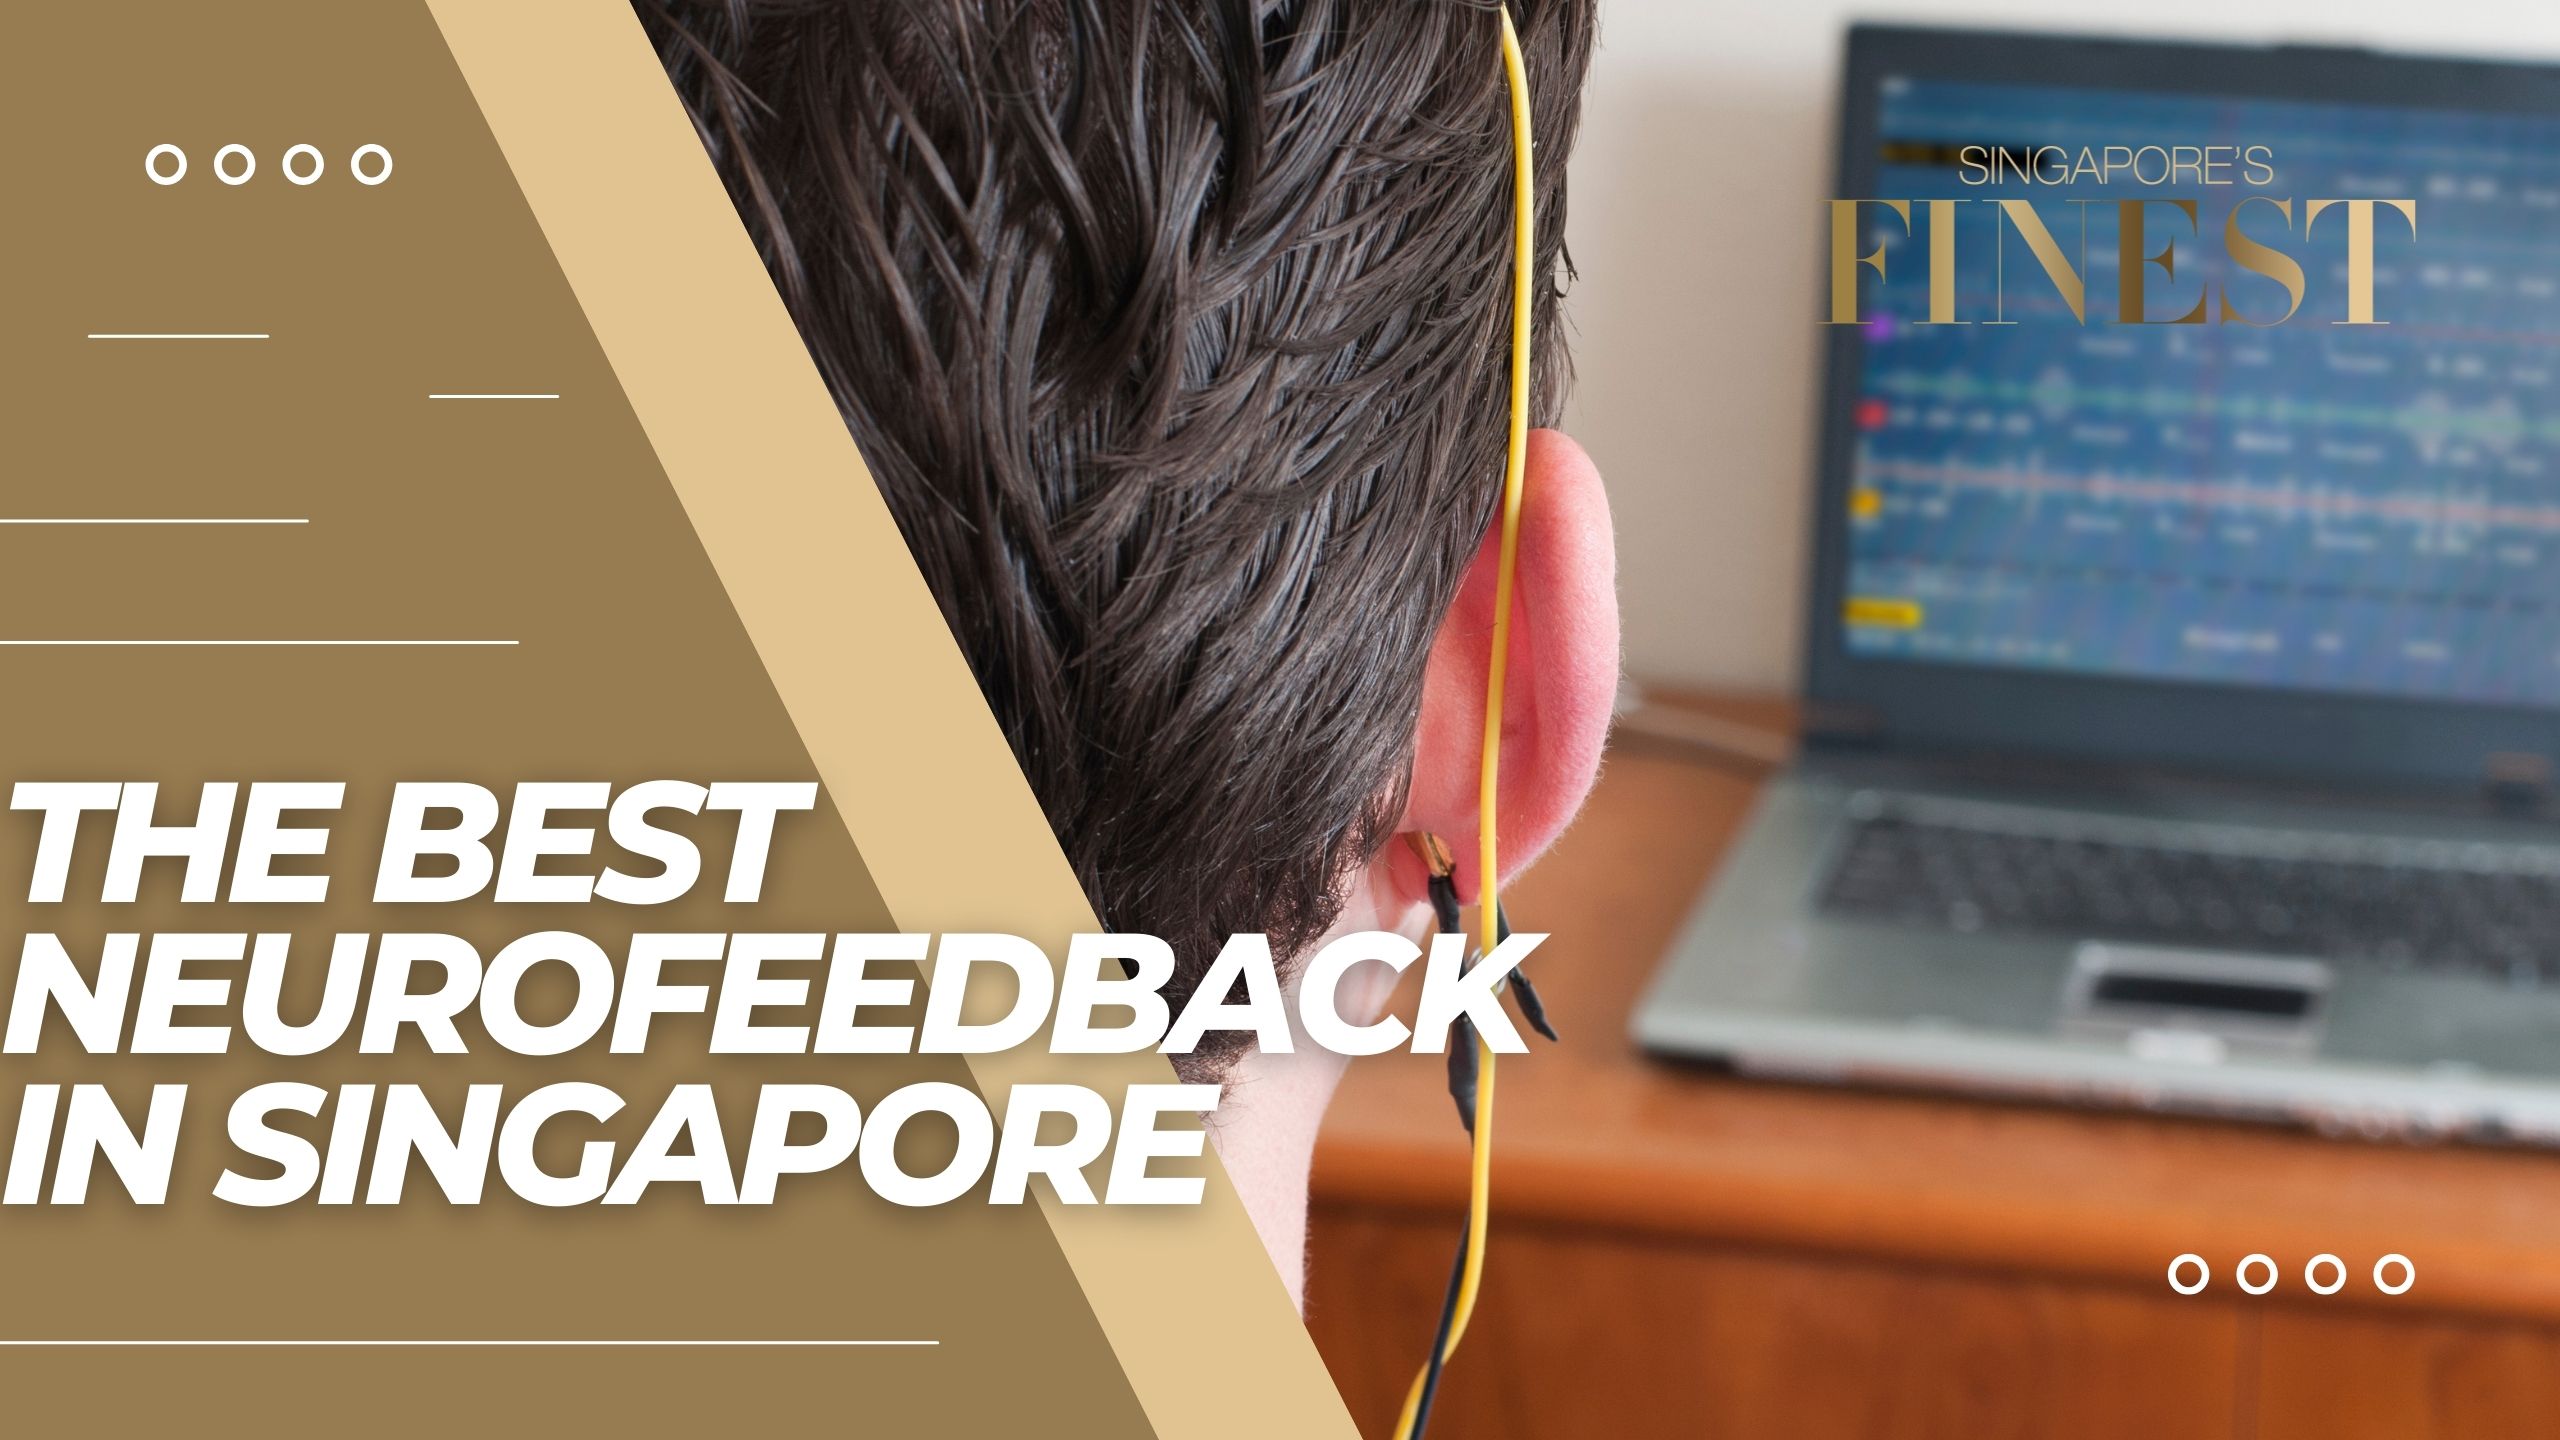 The Finest Neurofeedback in Singapore